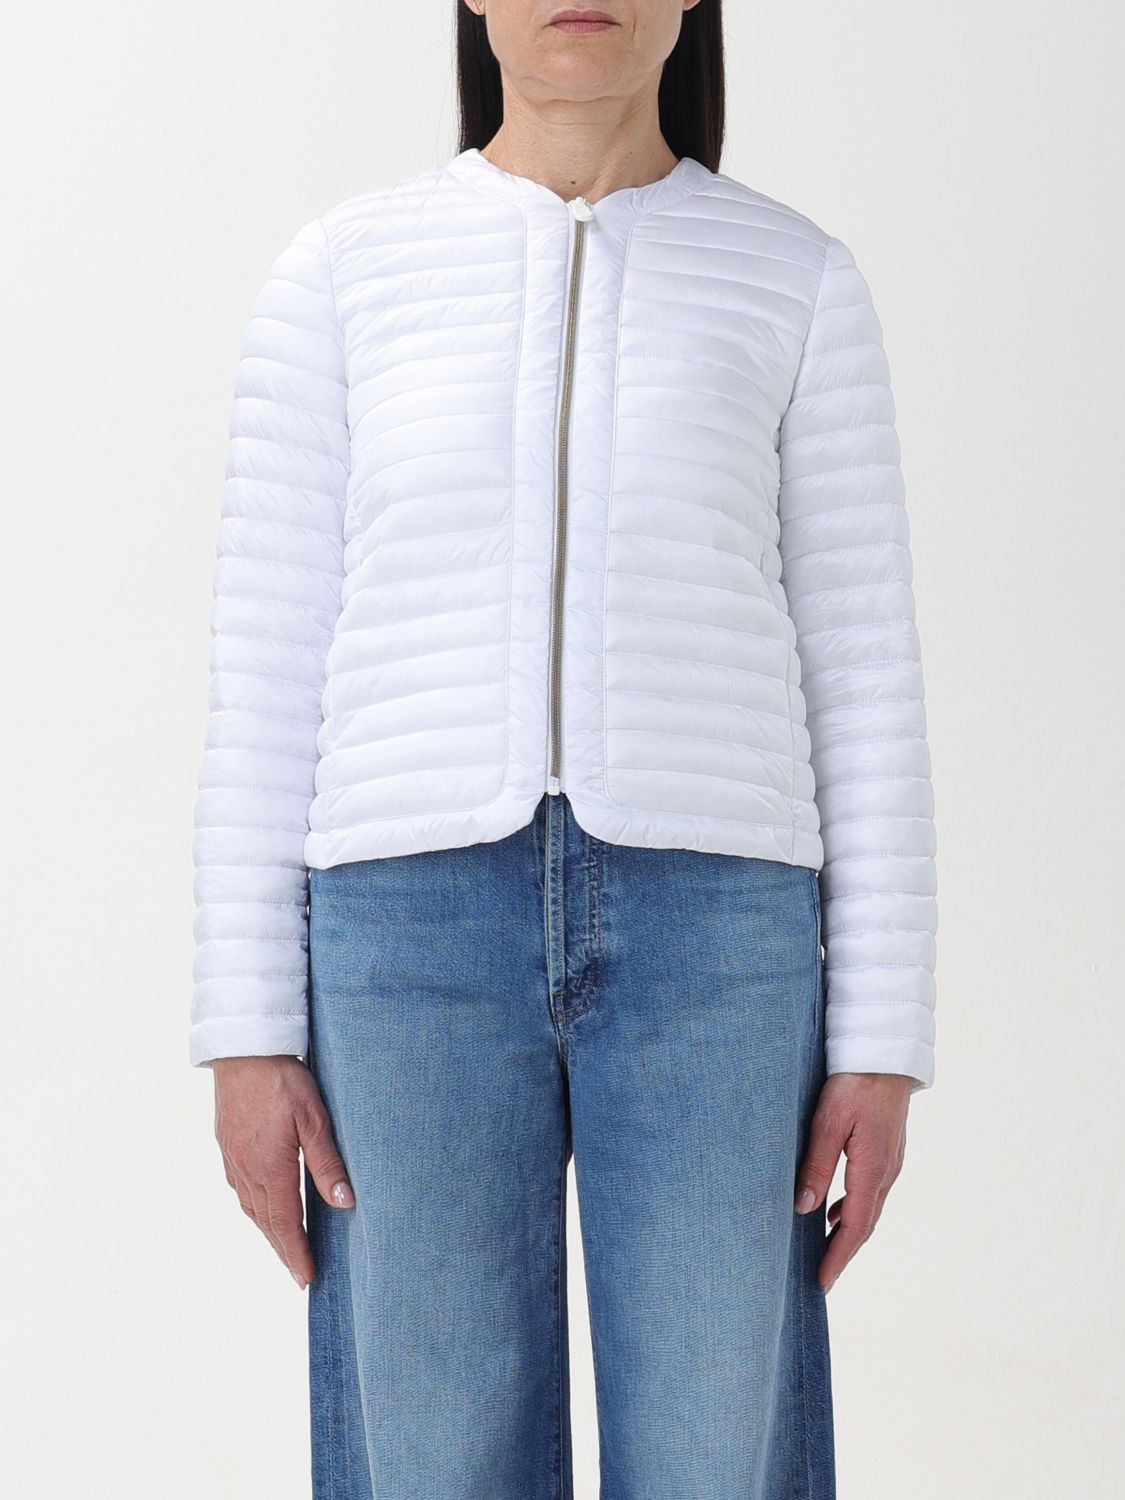 Shop Save The Duck Jacket  Woman Color White